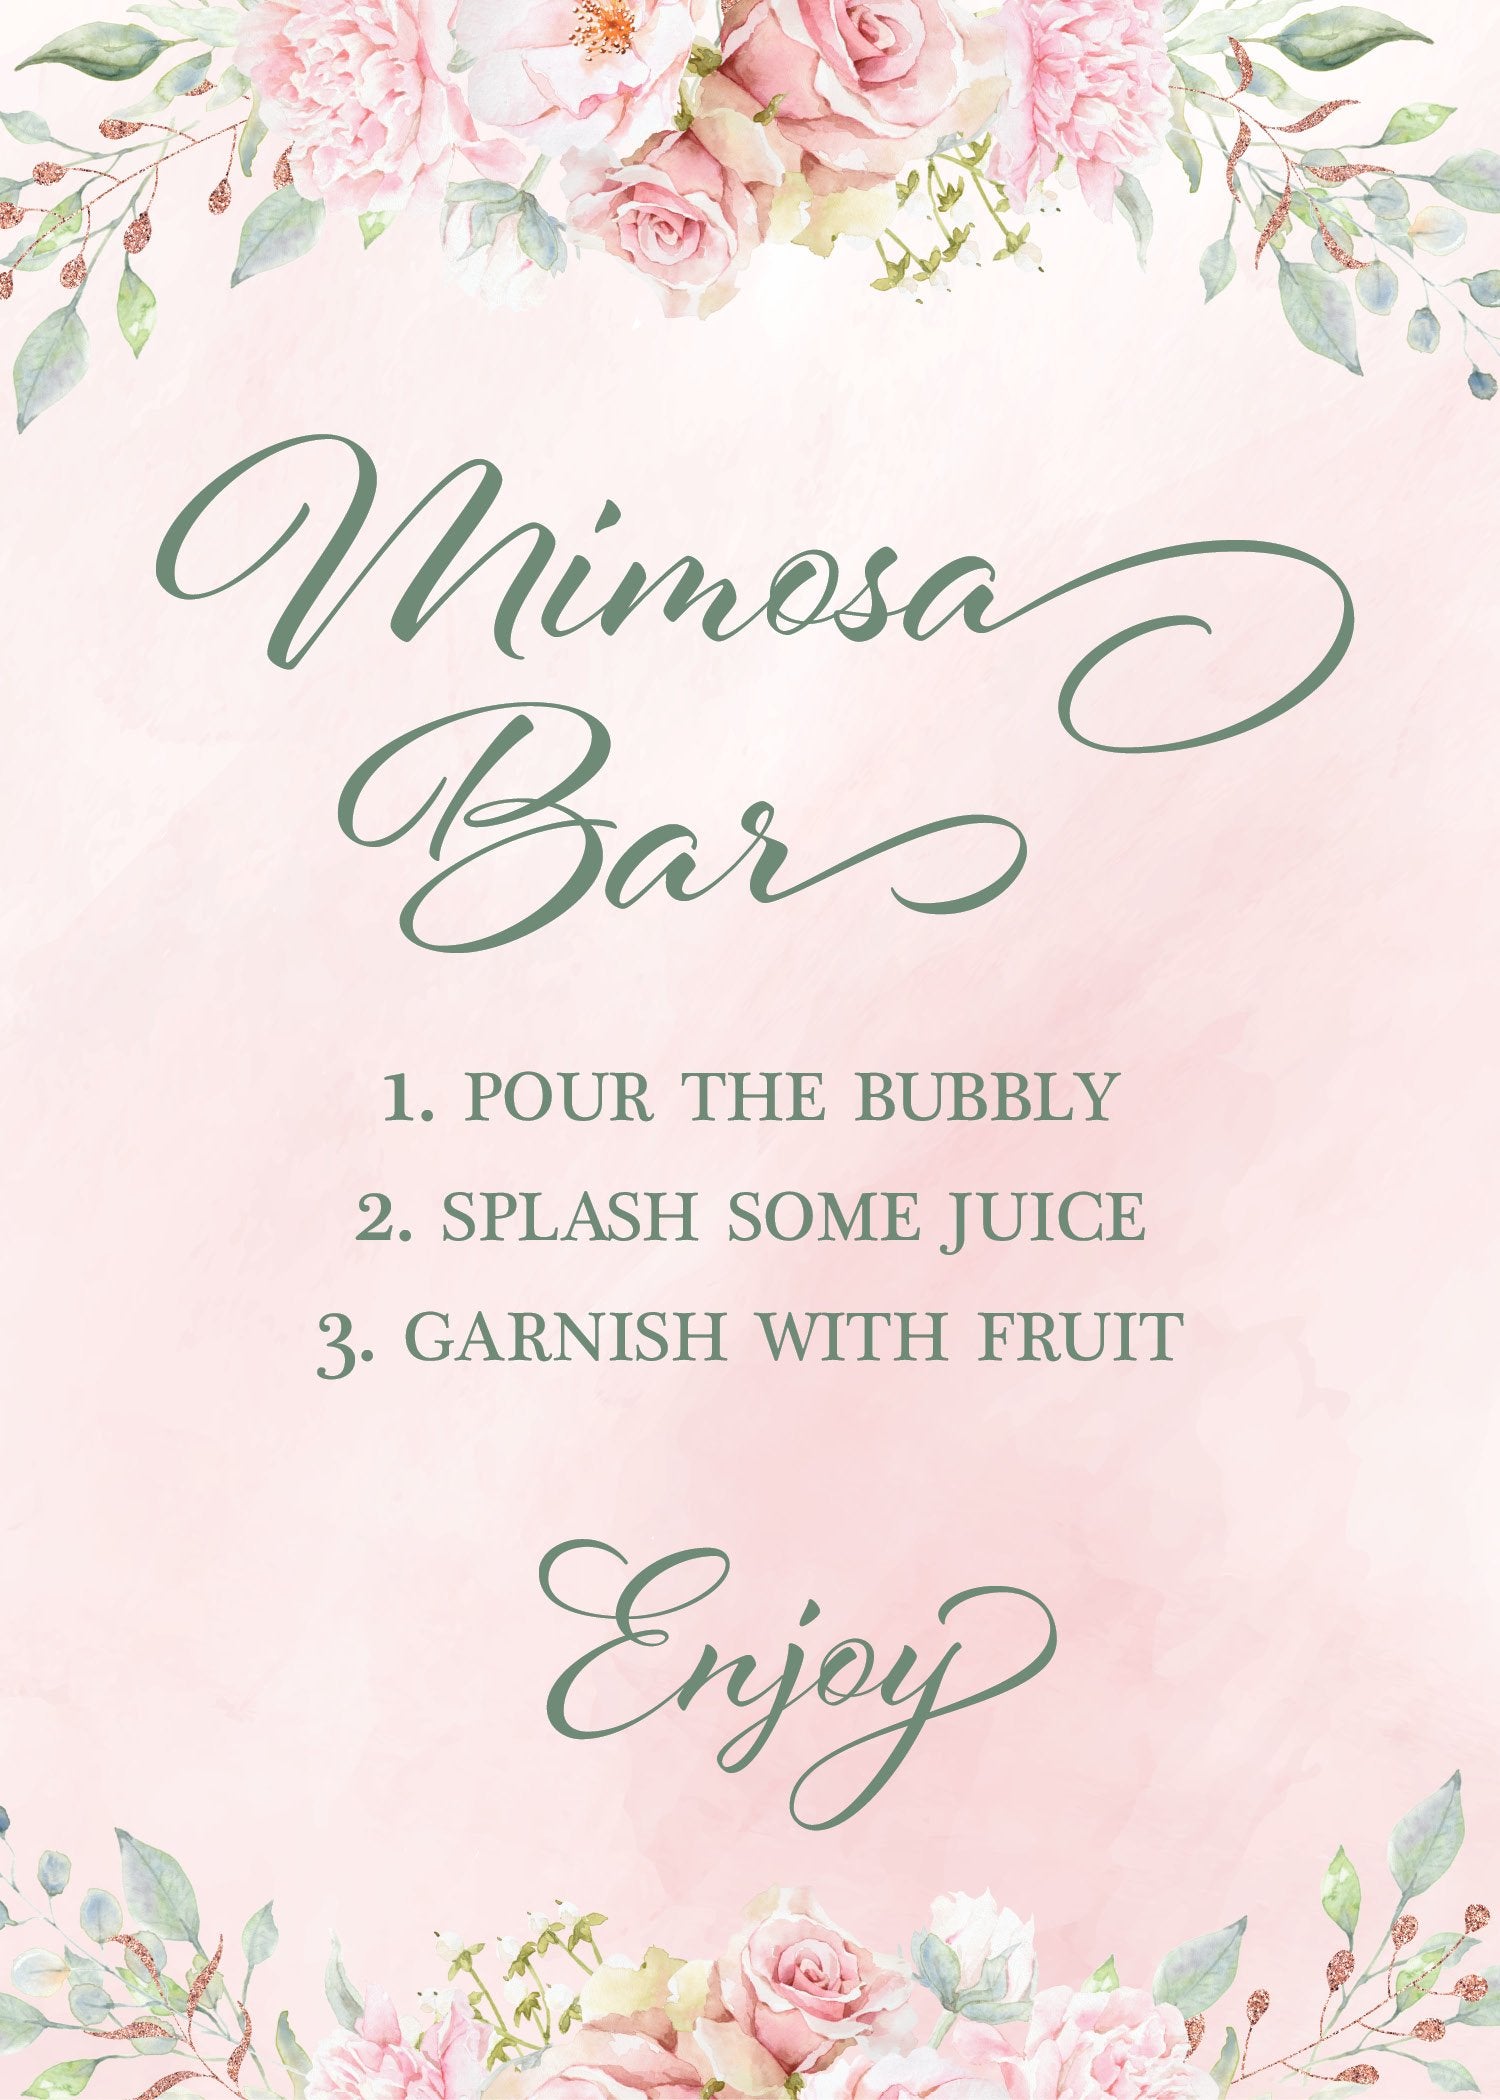 Mimosa Bar Sign - Printable Download - Pink Floral Bridal Shower  Decorations - BR1007